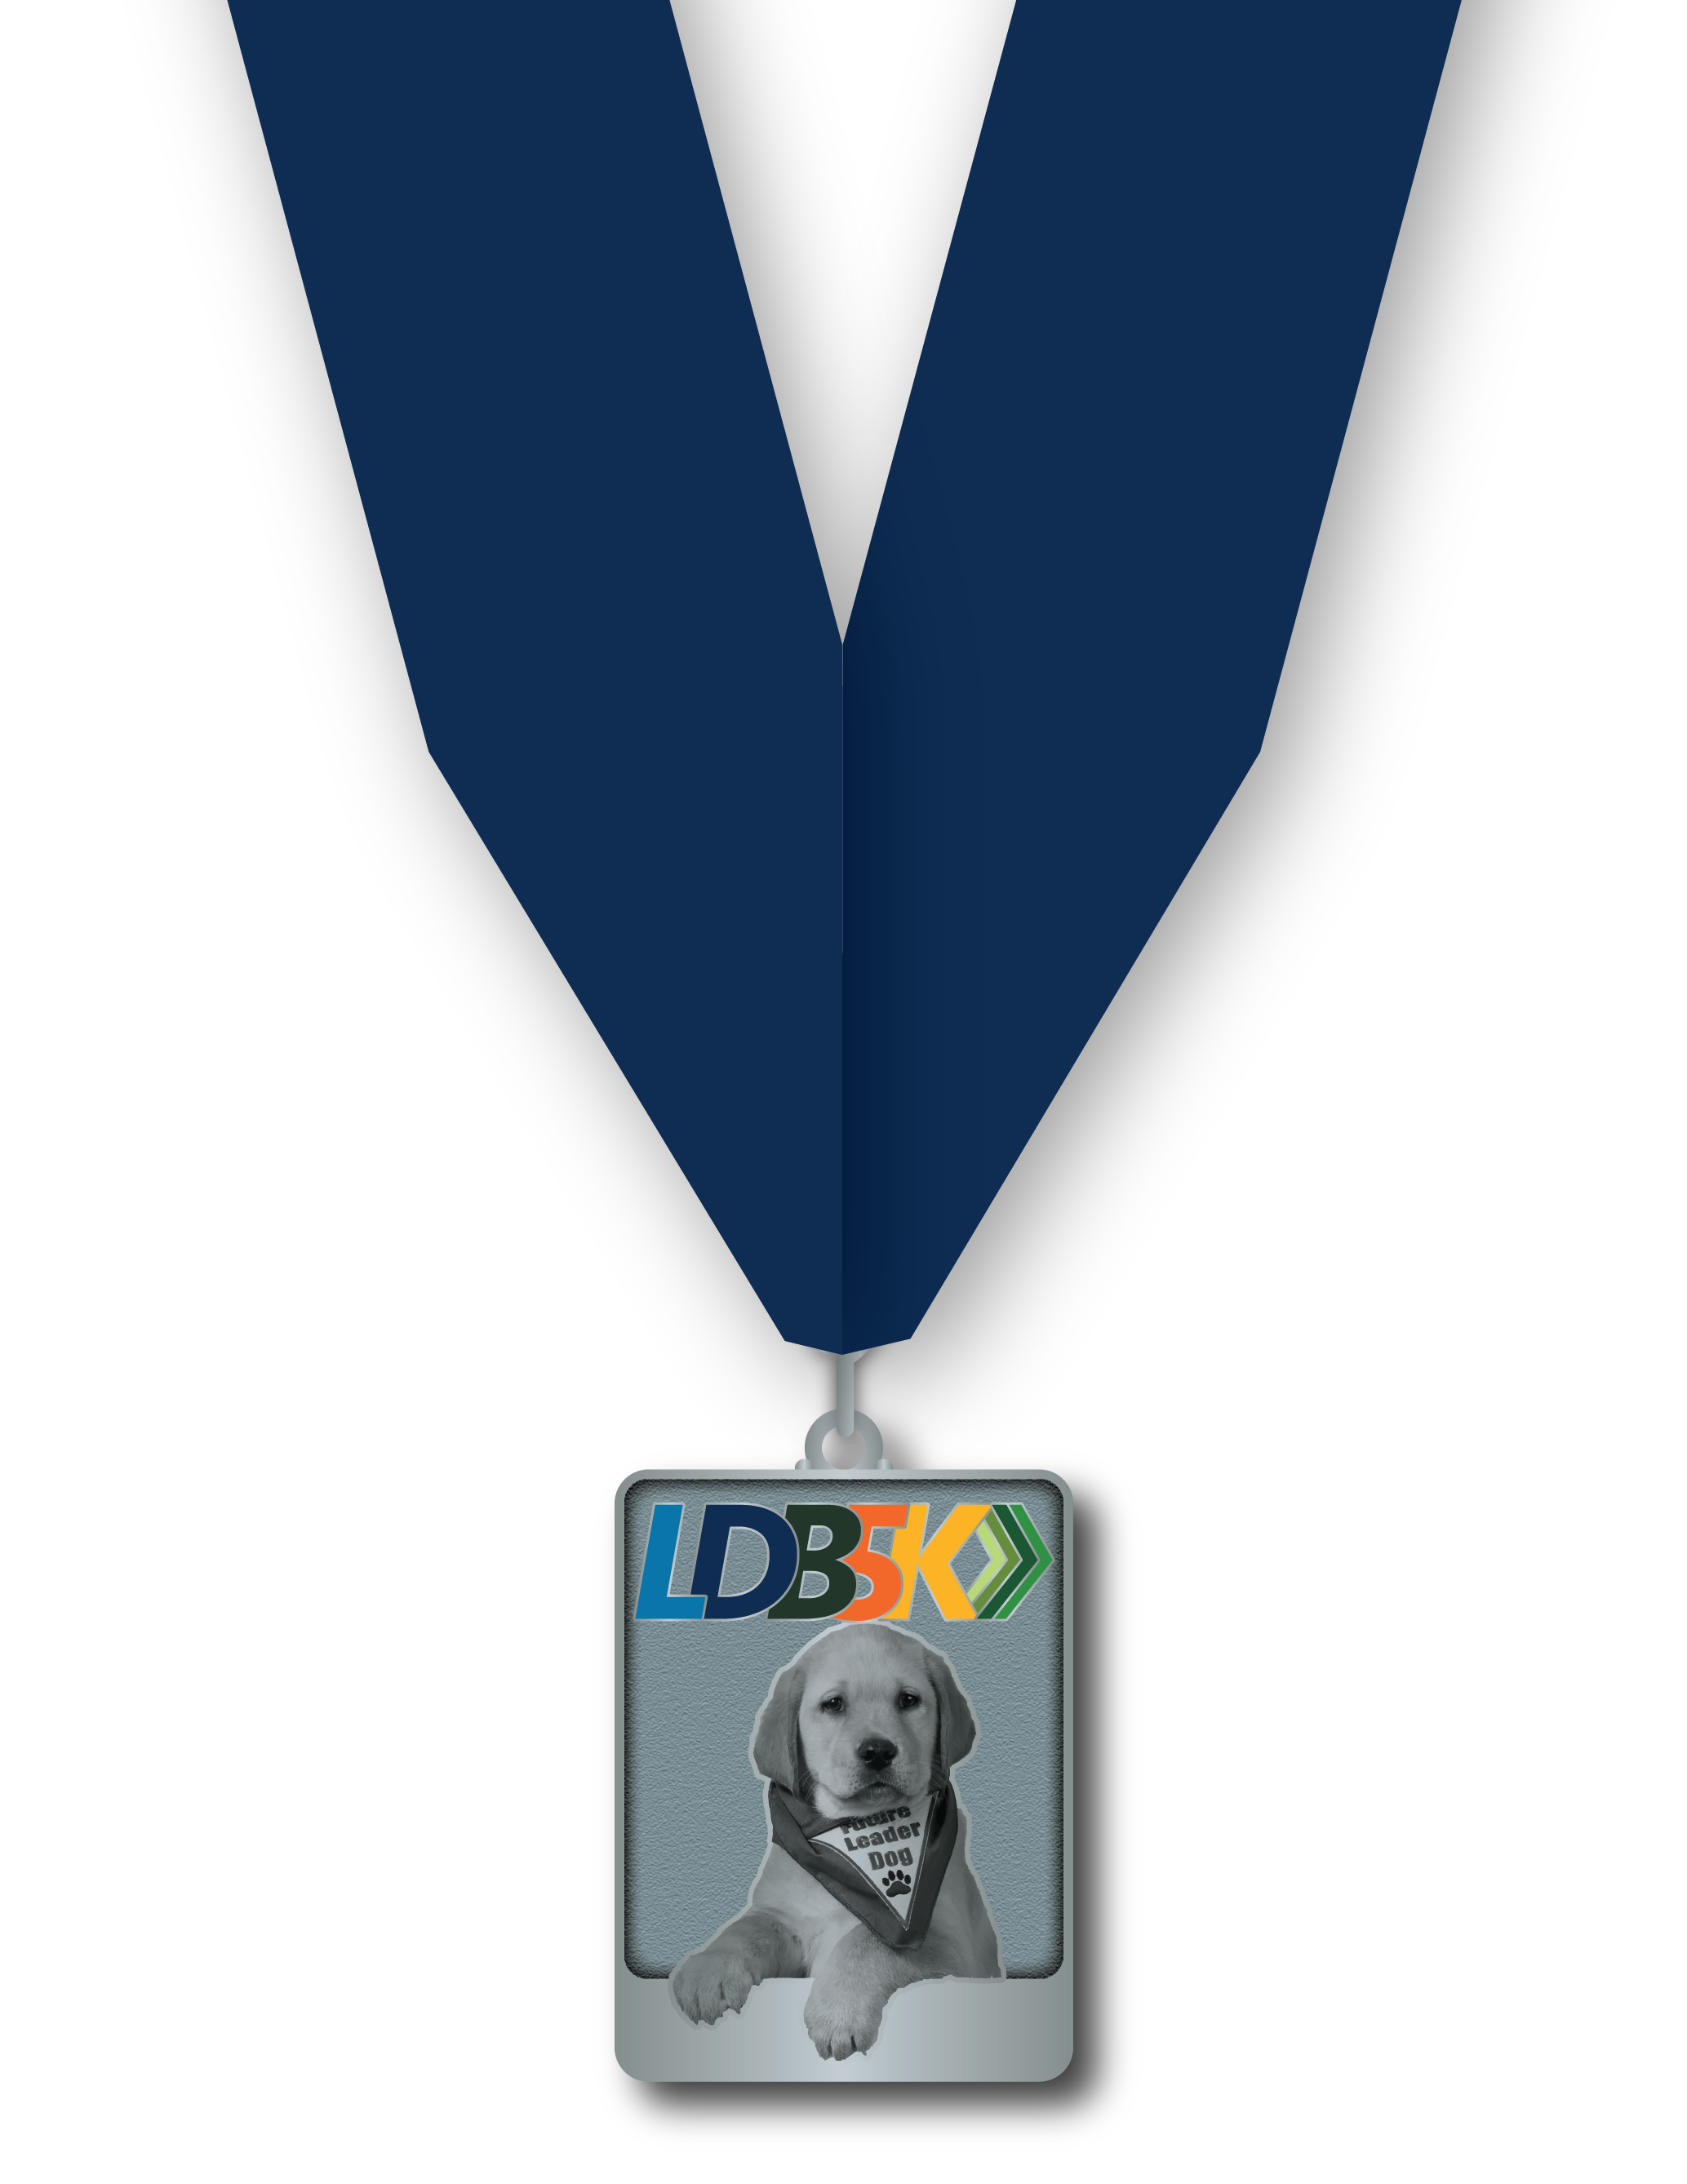 LDB5K Finisher Medal